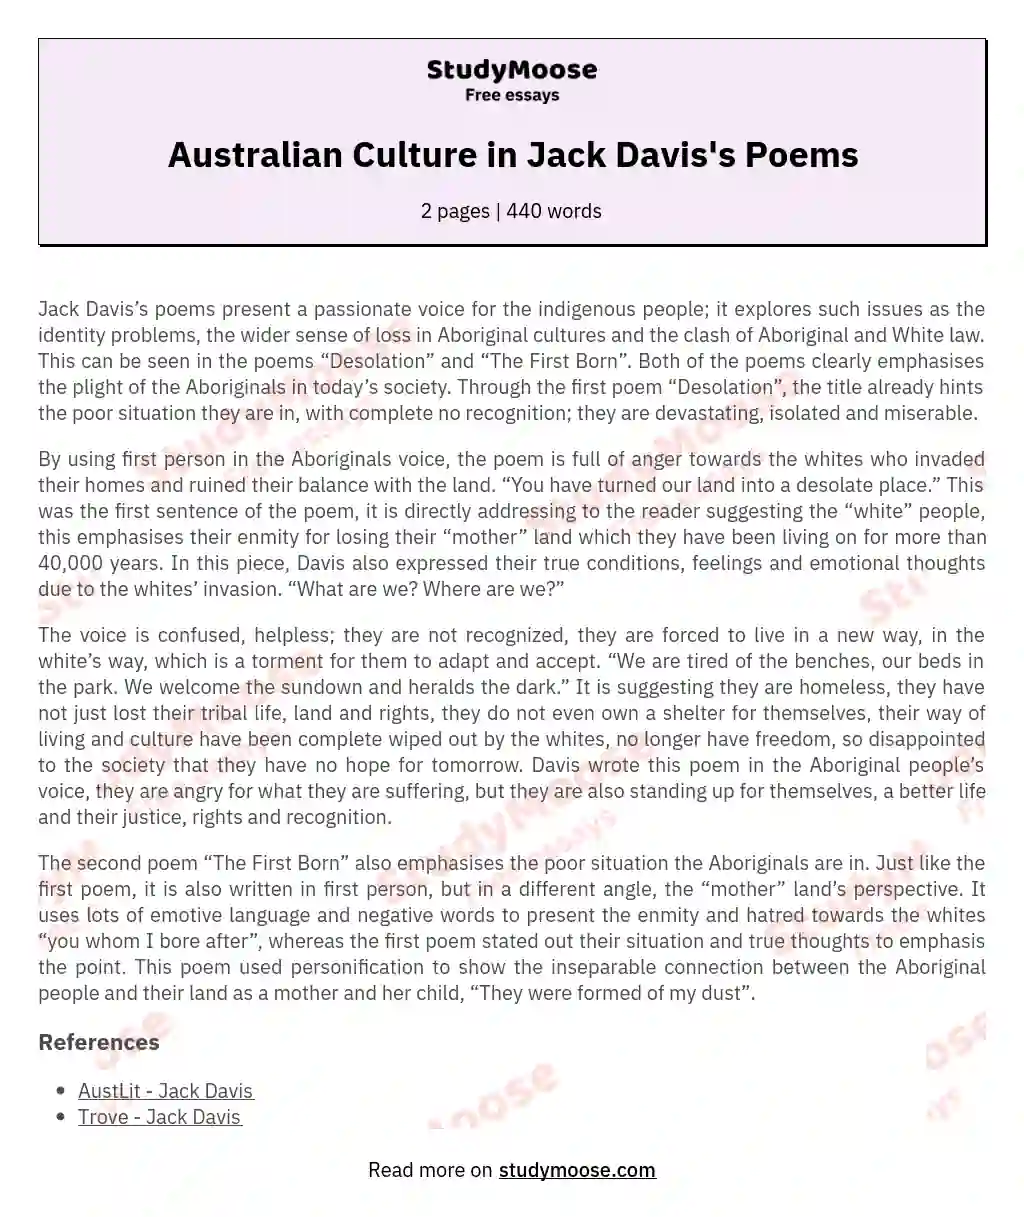 Australian Culture in Jack Davis's Poems